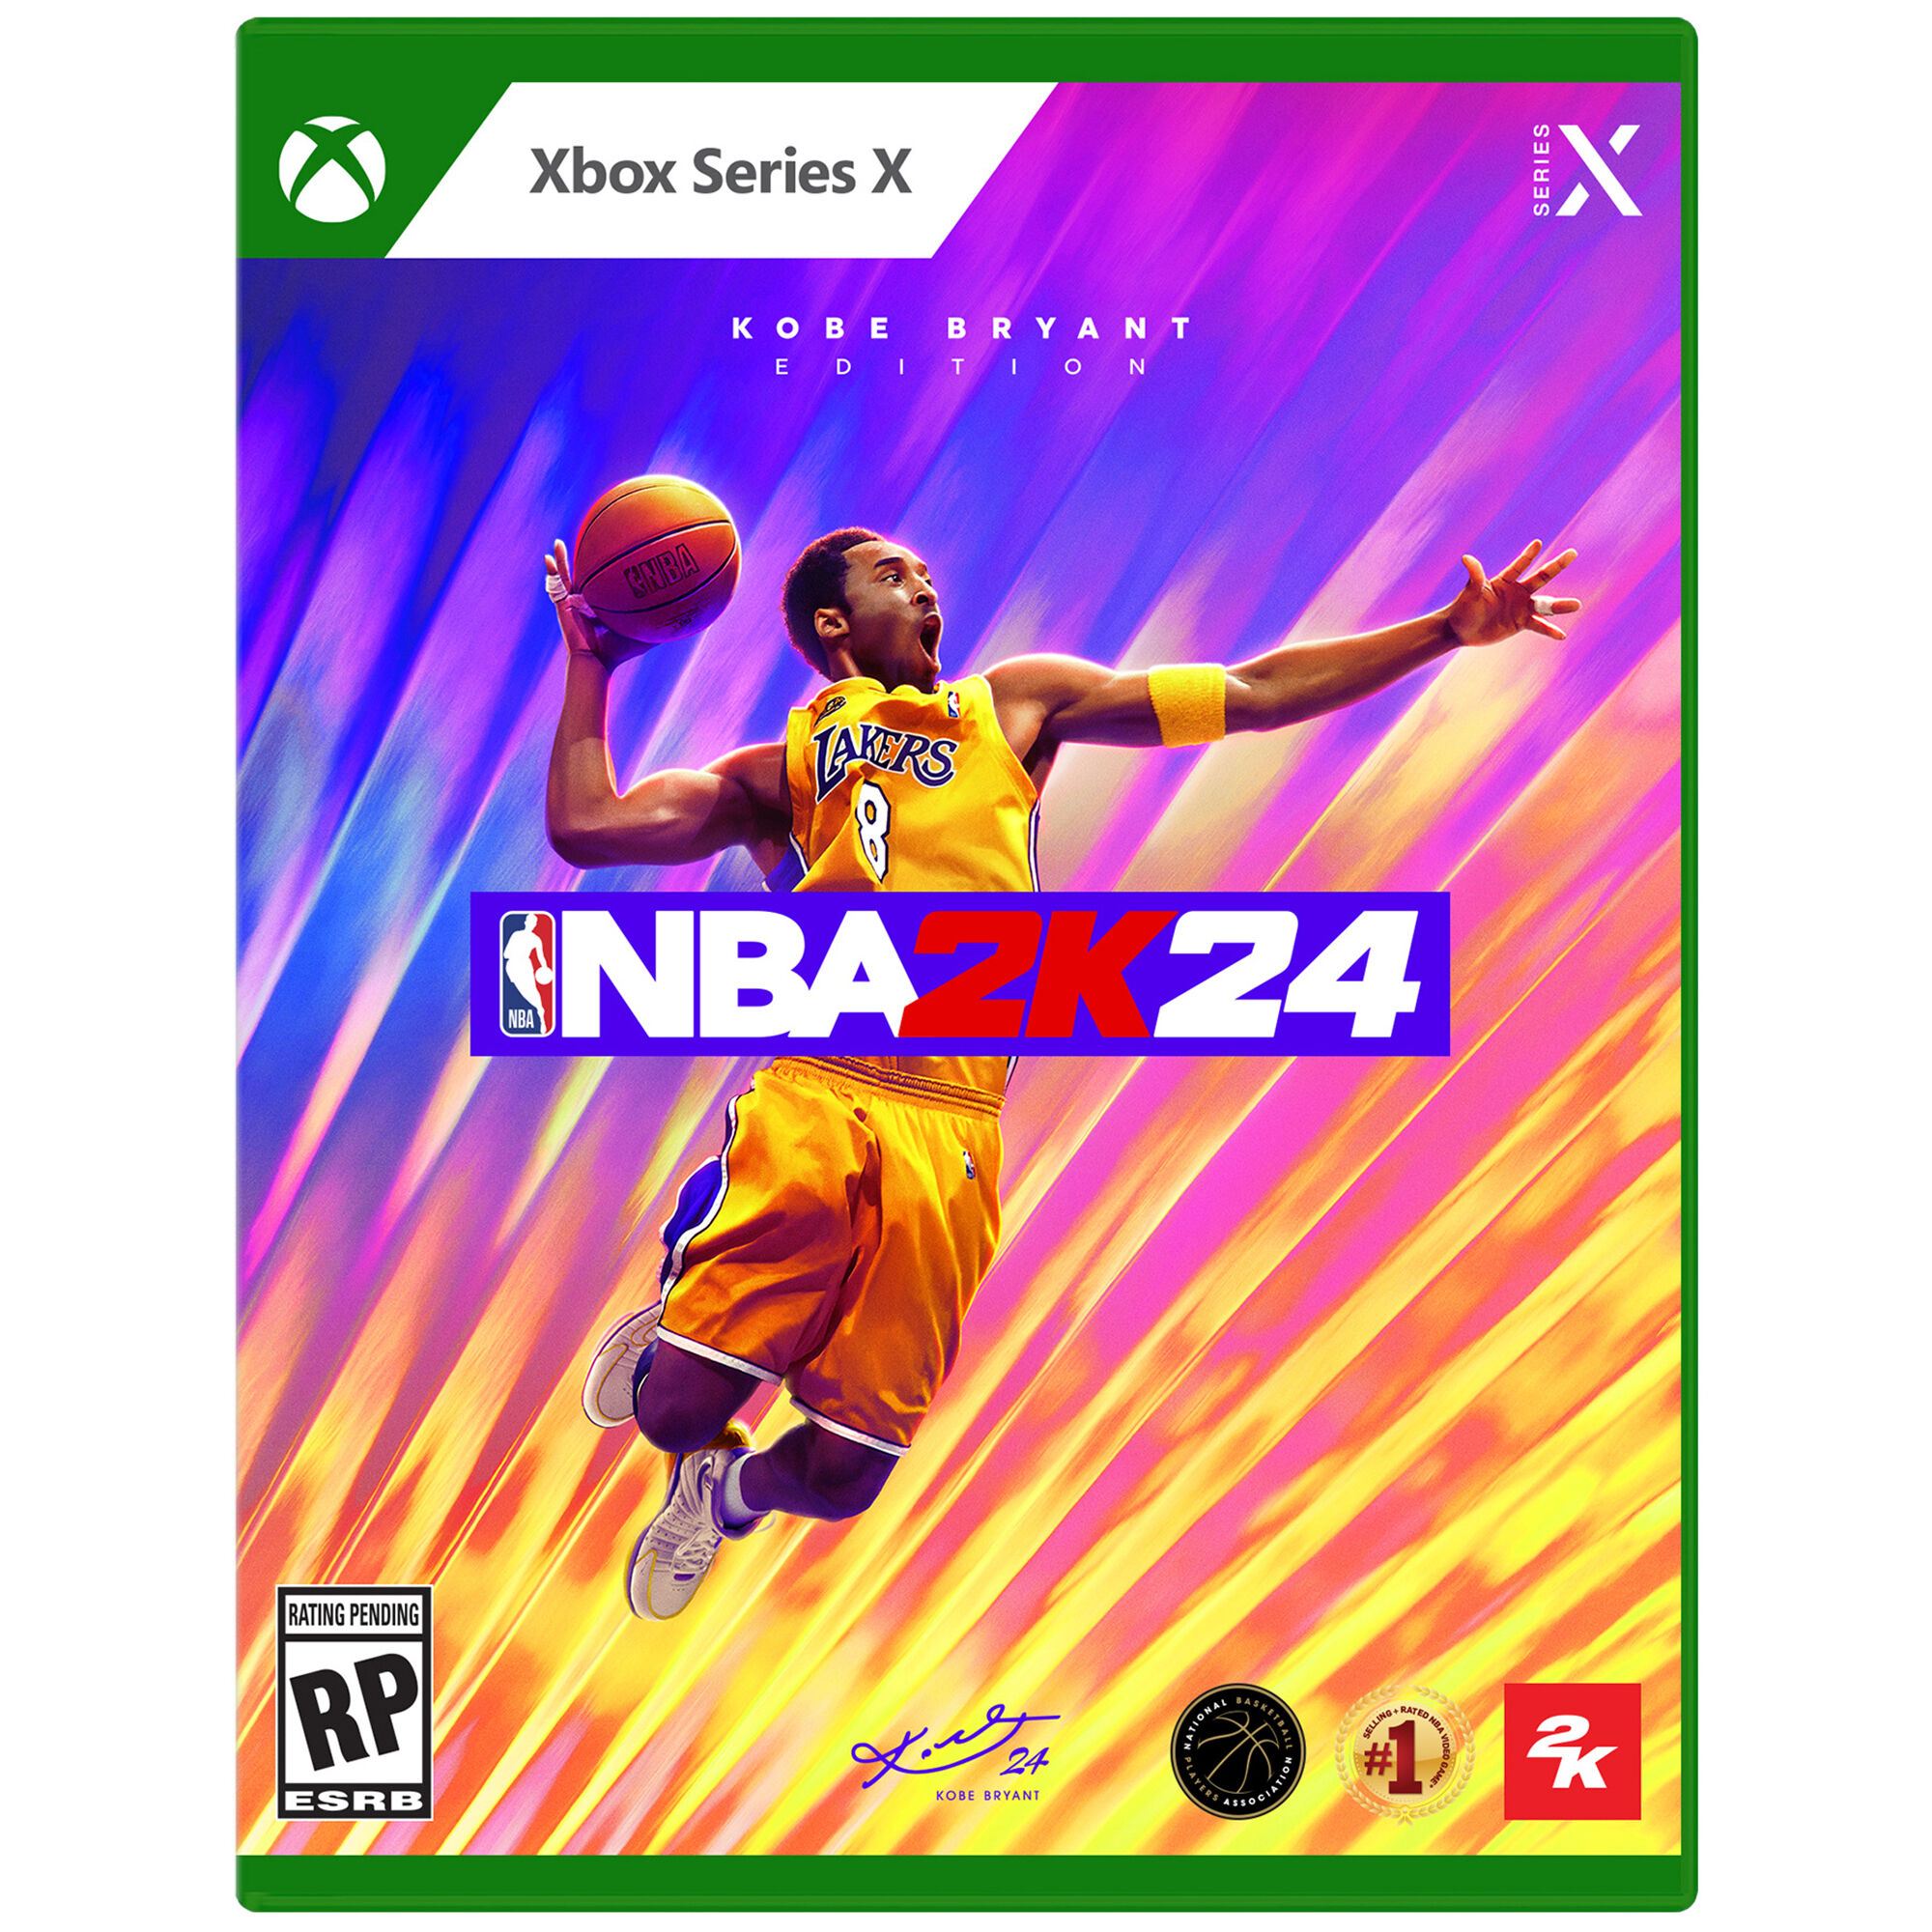 NBA 2K24 Kobe Bryant Edition for Xbox Series X